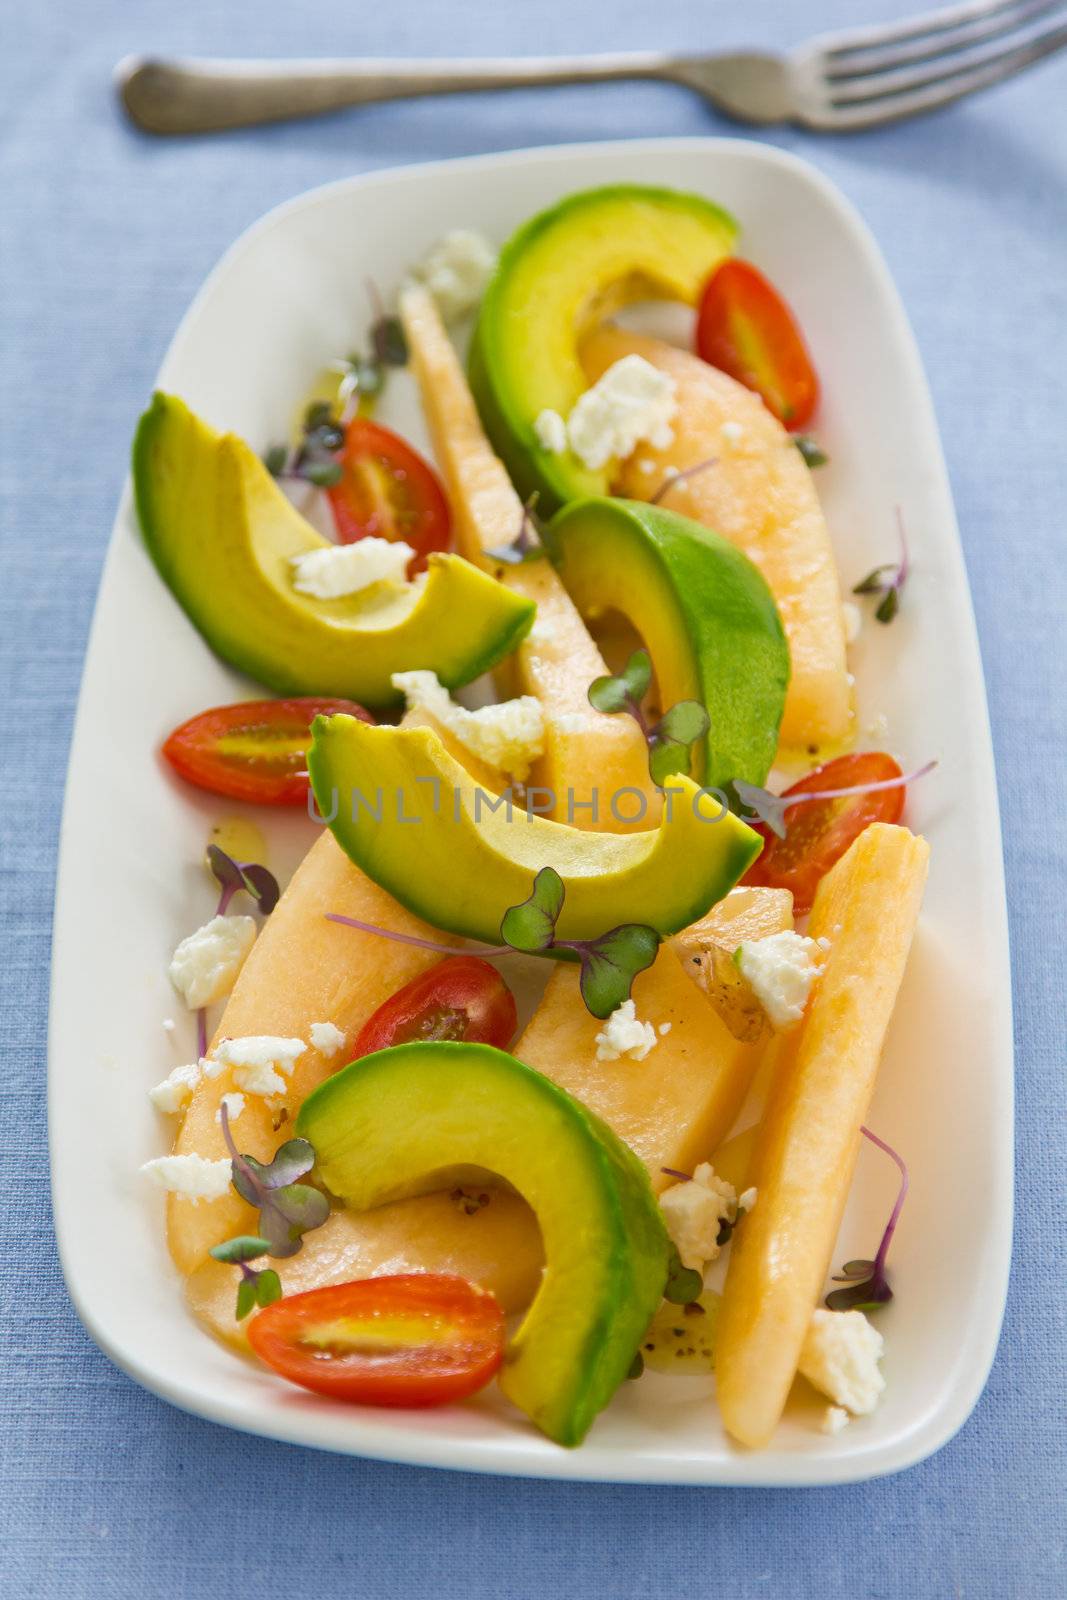 Avocado with Cantaloupe and Feta cheese salad by vinaigrette